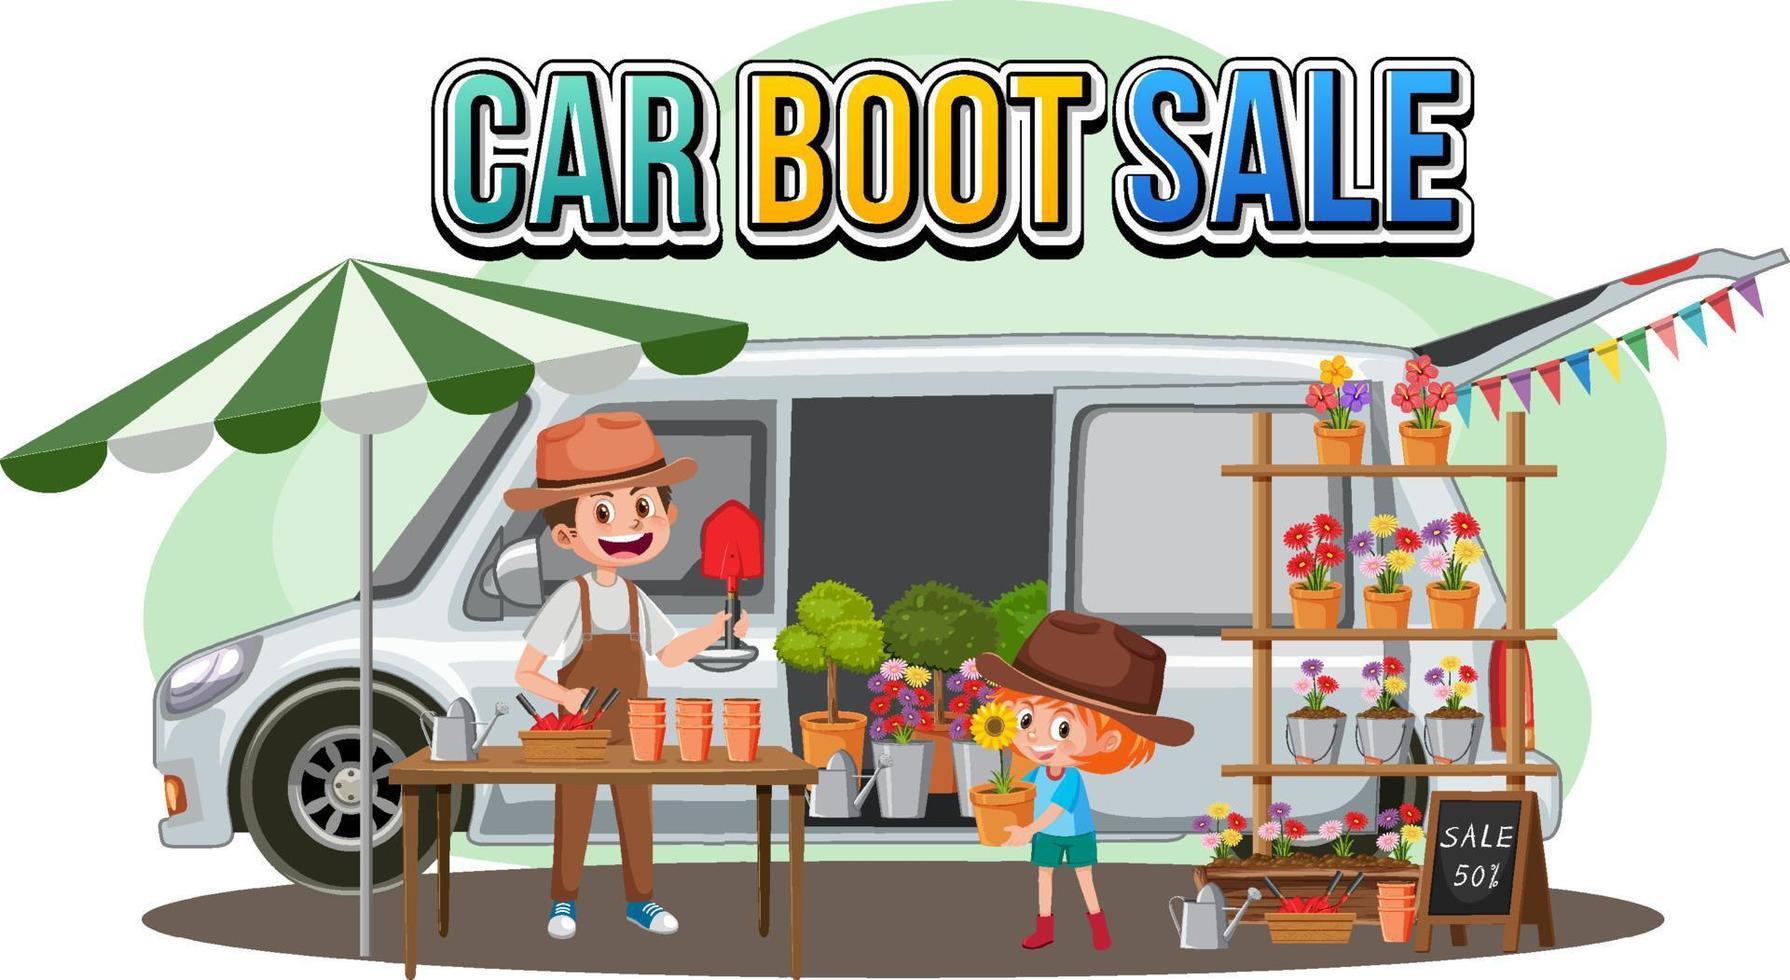 Flea market concept with car boot sale vector